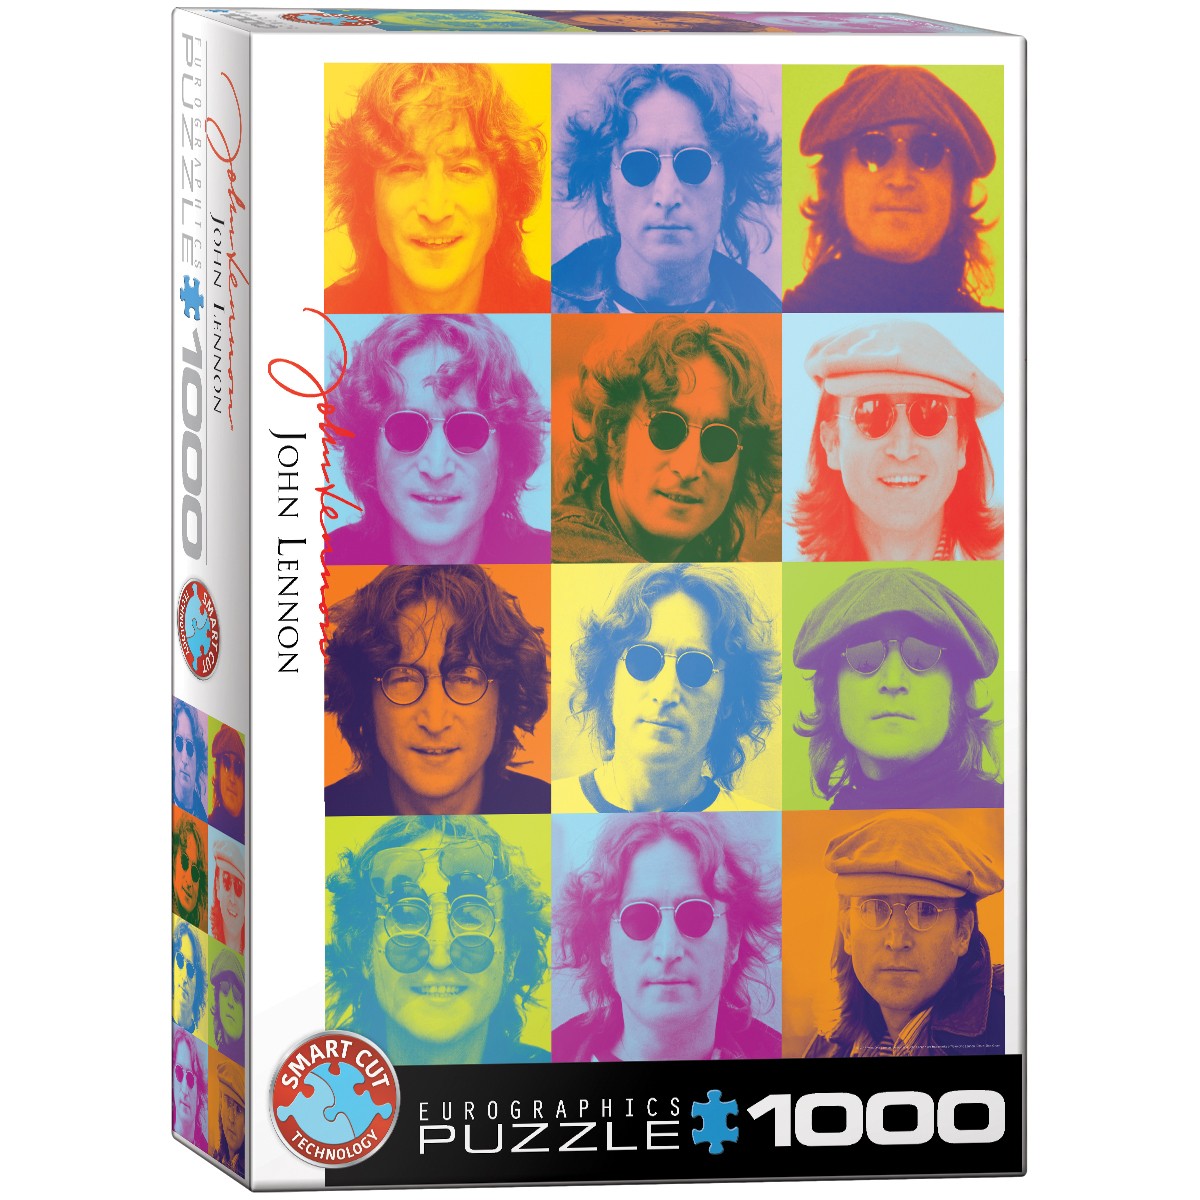 Eurographics Puzzle 6000-0807 - John Lennon Farbportraits - 1000 Teile